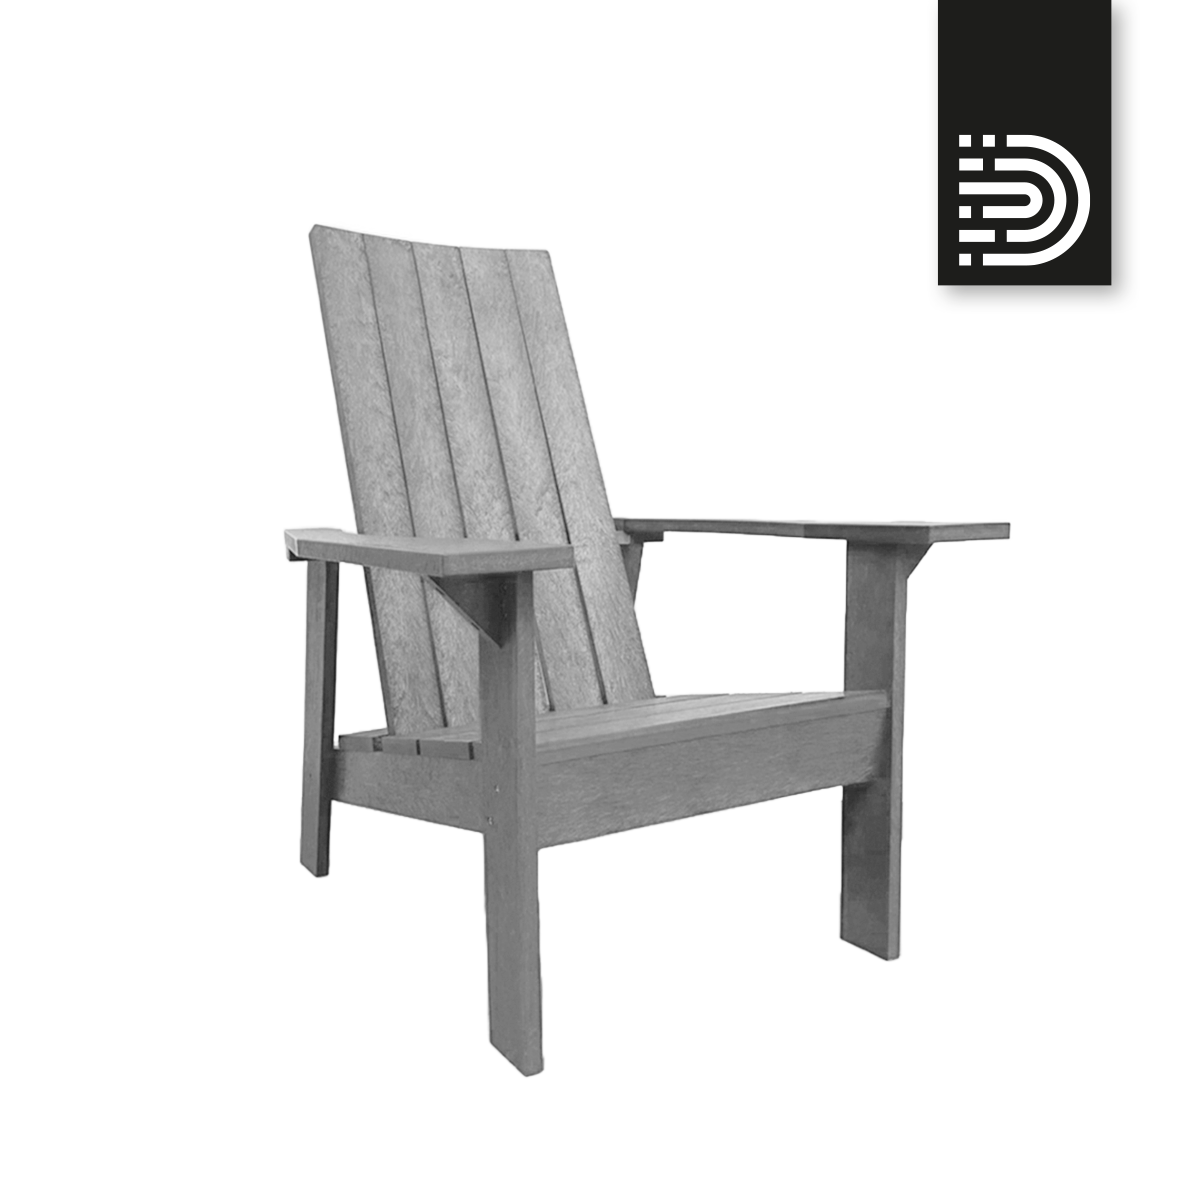 CX10 Flatback Adirondack Chair - Driftwood 32